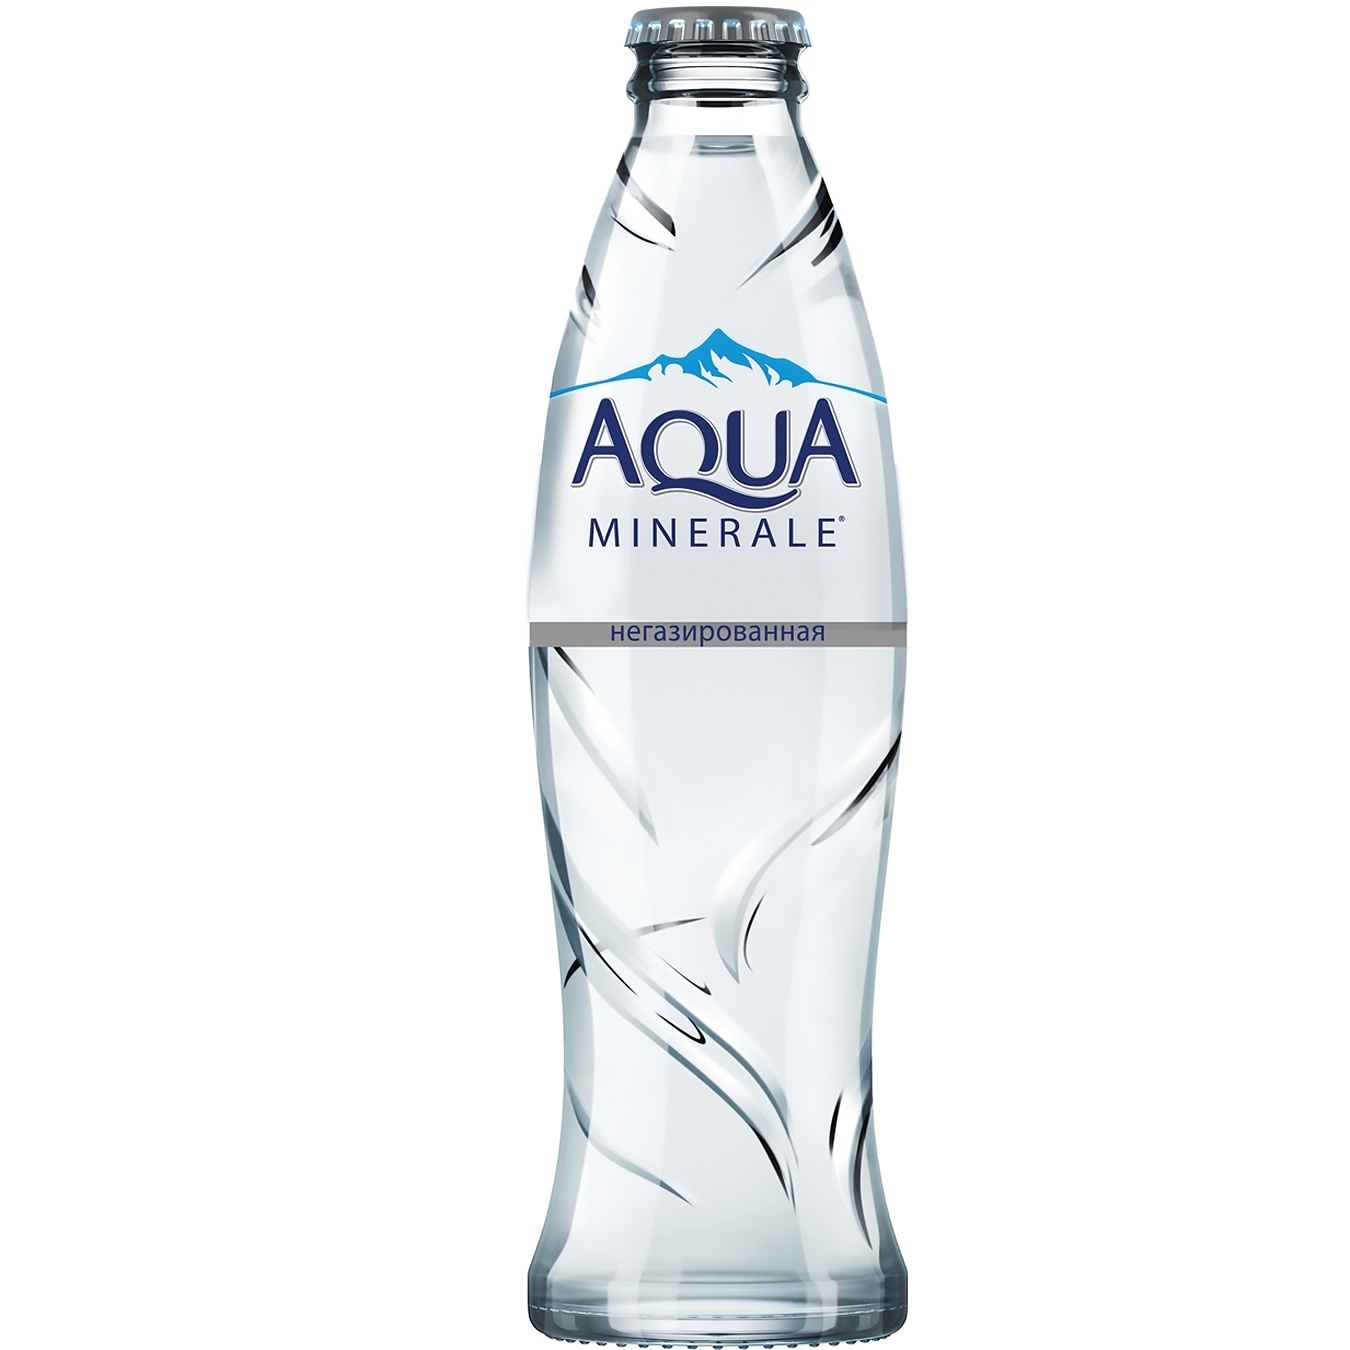 Вода без газа стекло. Негазированная вода Aqua minerale. Аква Минерале 0.26. Аква Минерале стекло 0.25л. Аква Минерале негазированная 0,25 мл.